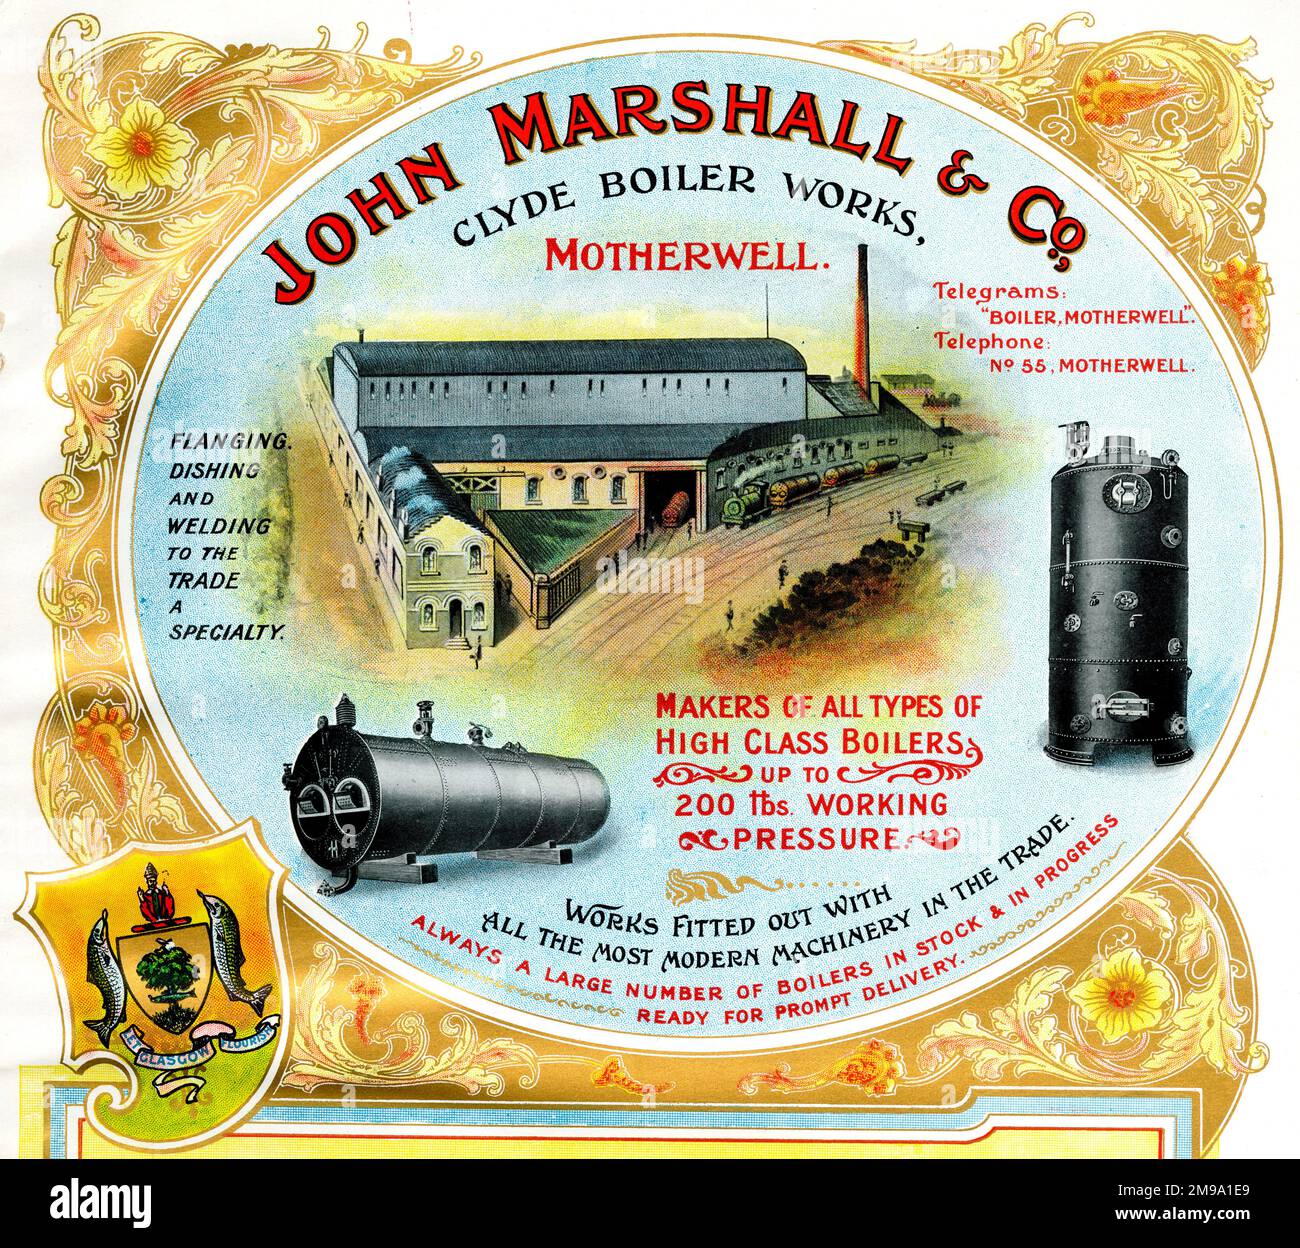 John Marshall, Clyde Boiler Works, Motherwell - Scotland's Industrial  Souvenir 1905 Stock Photo - Alamy